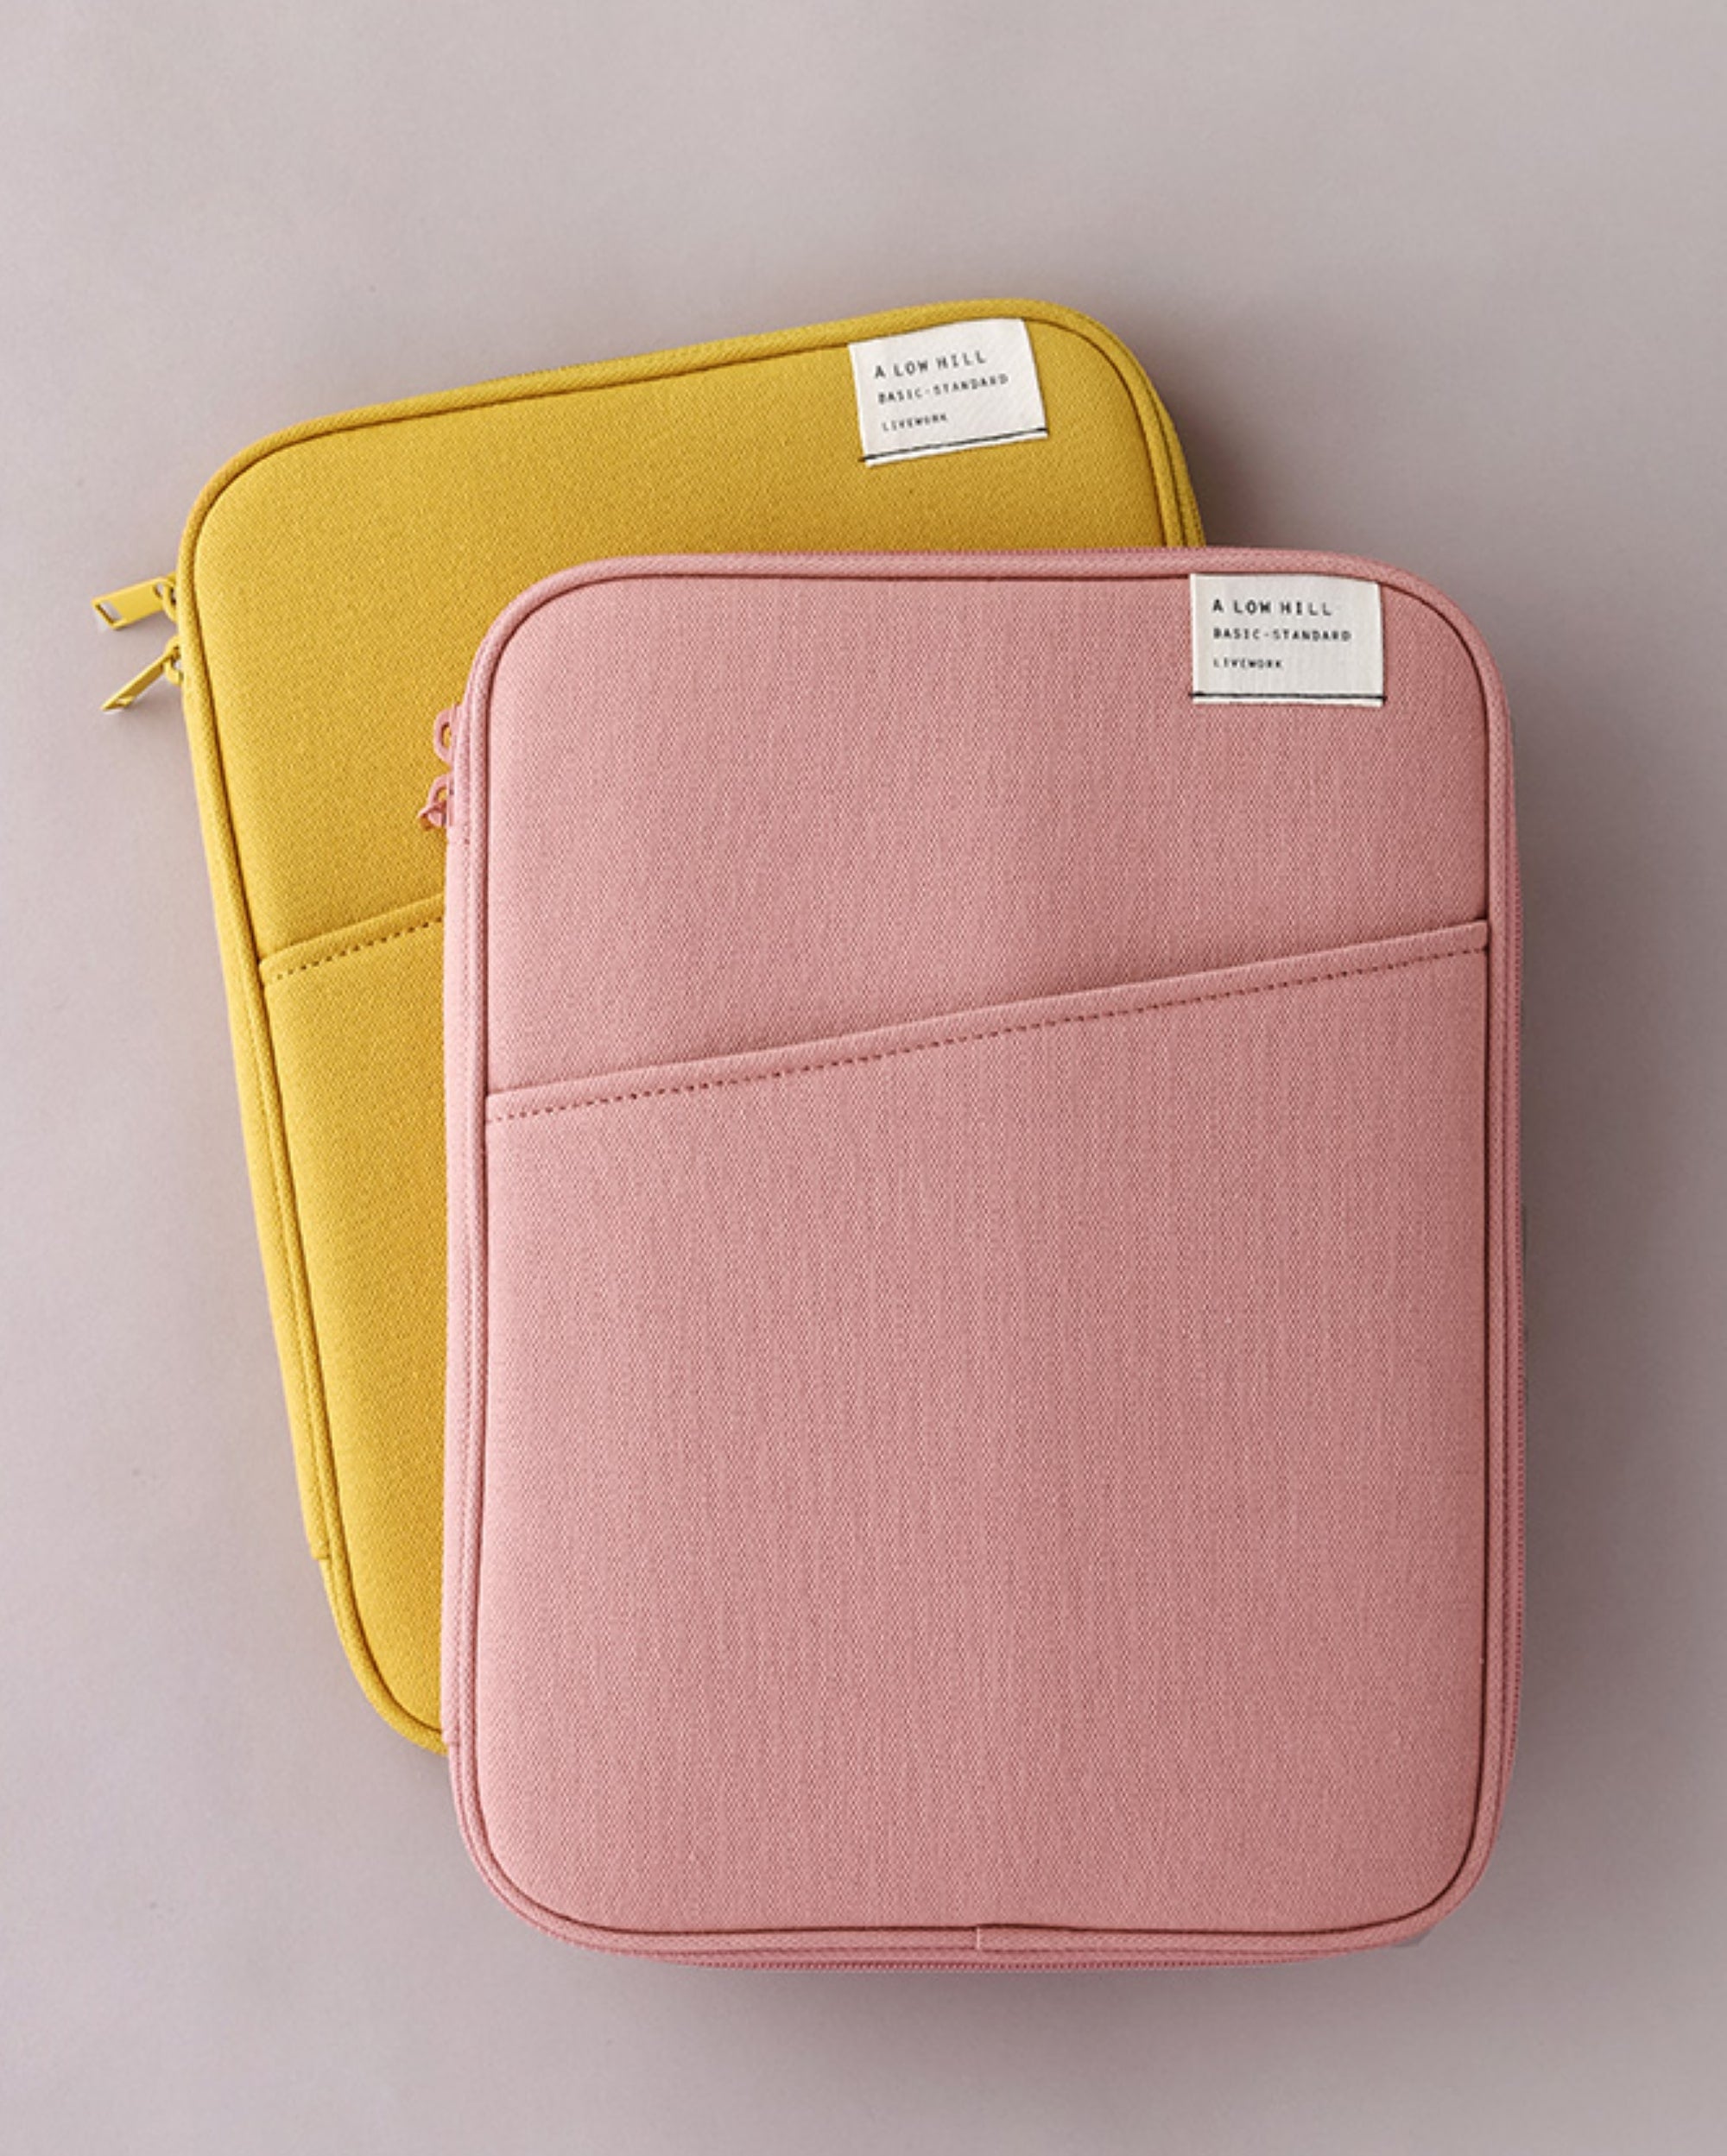 13 Inch Cute Laptop Sleeve Bag For Mac Ipad Pro Cotton Laptop